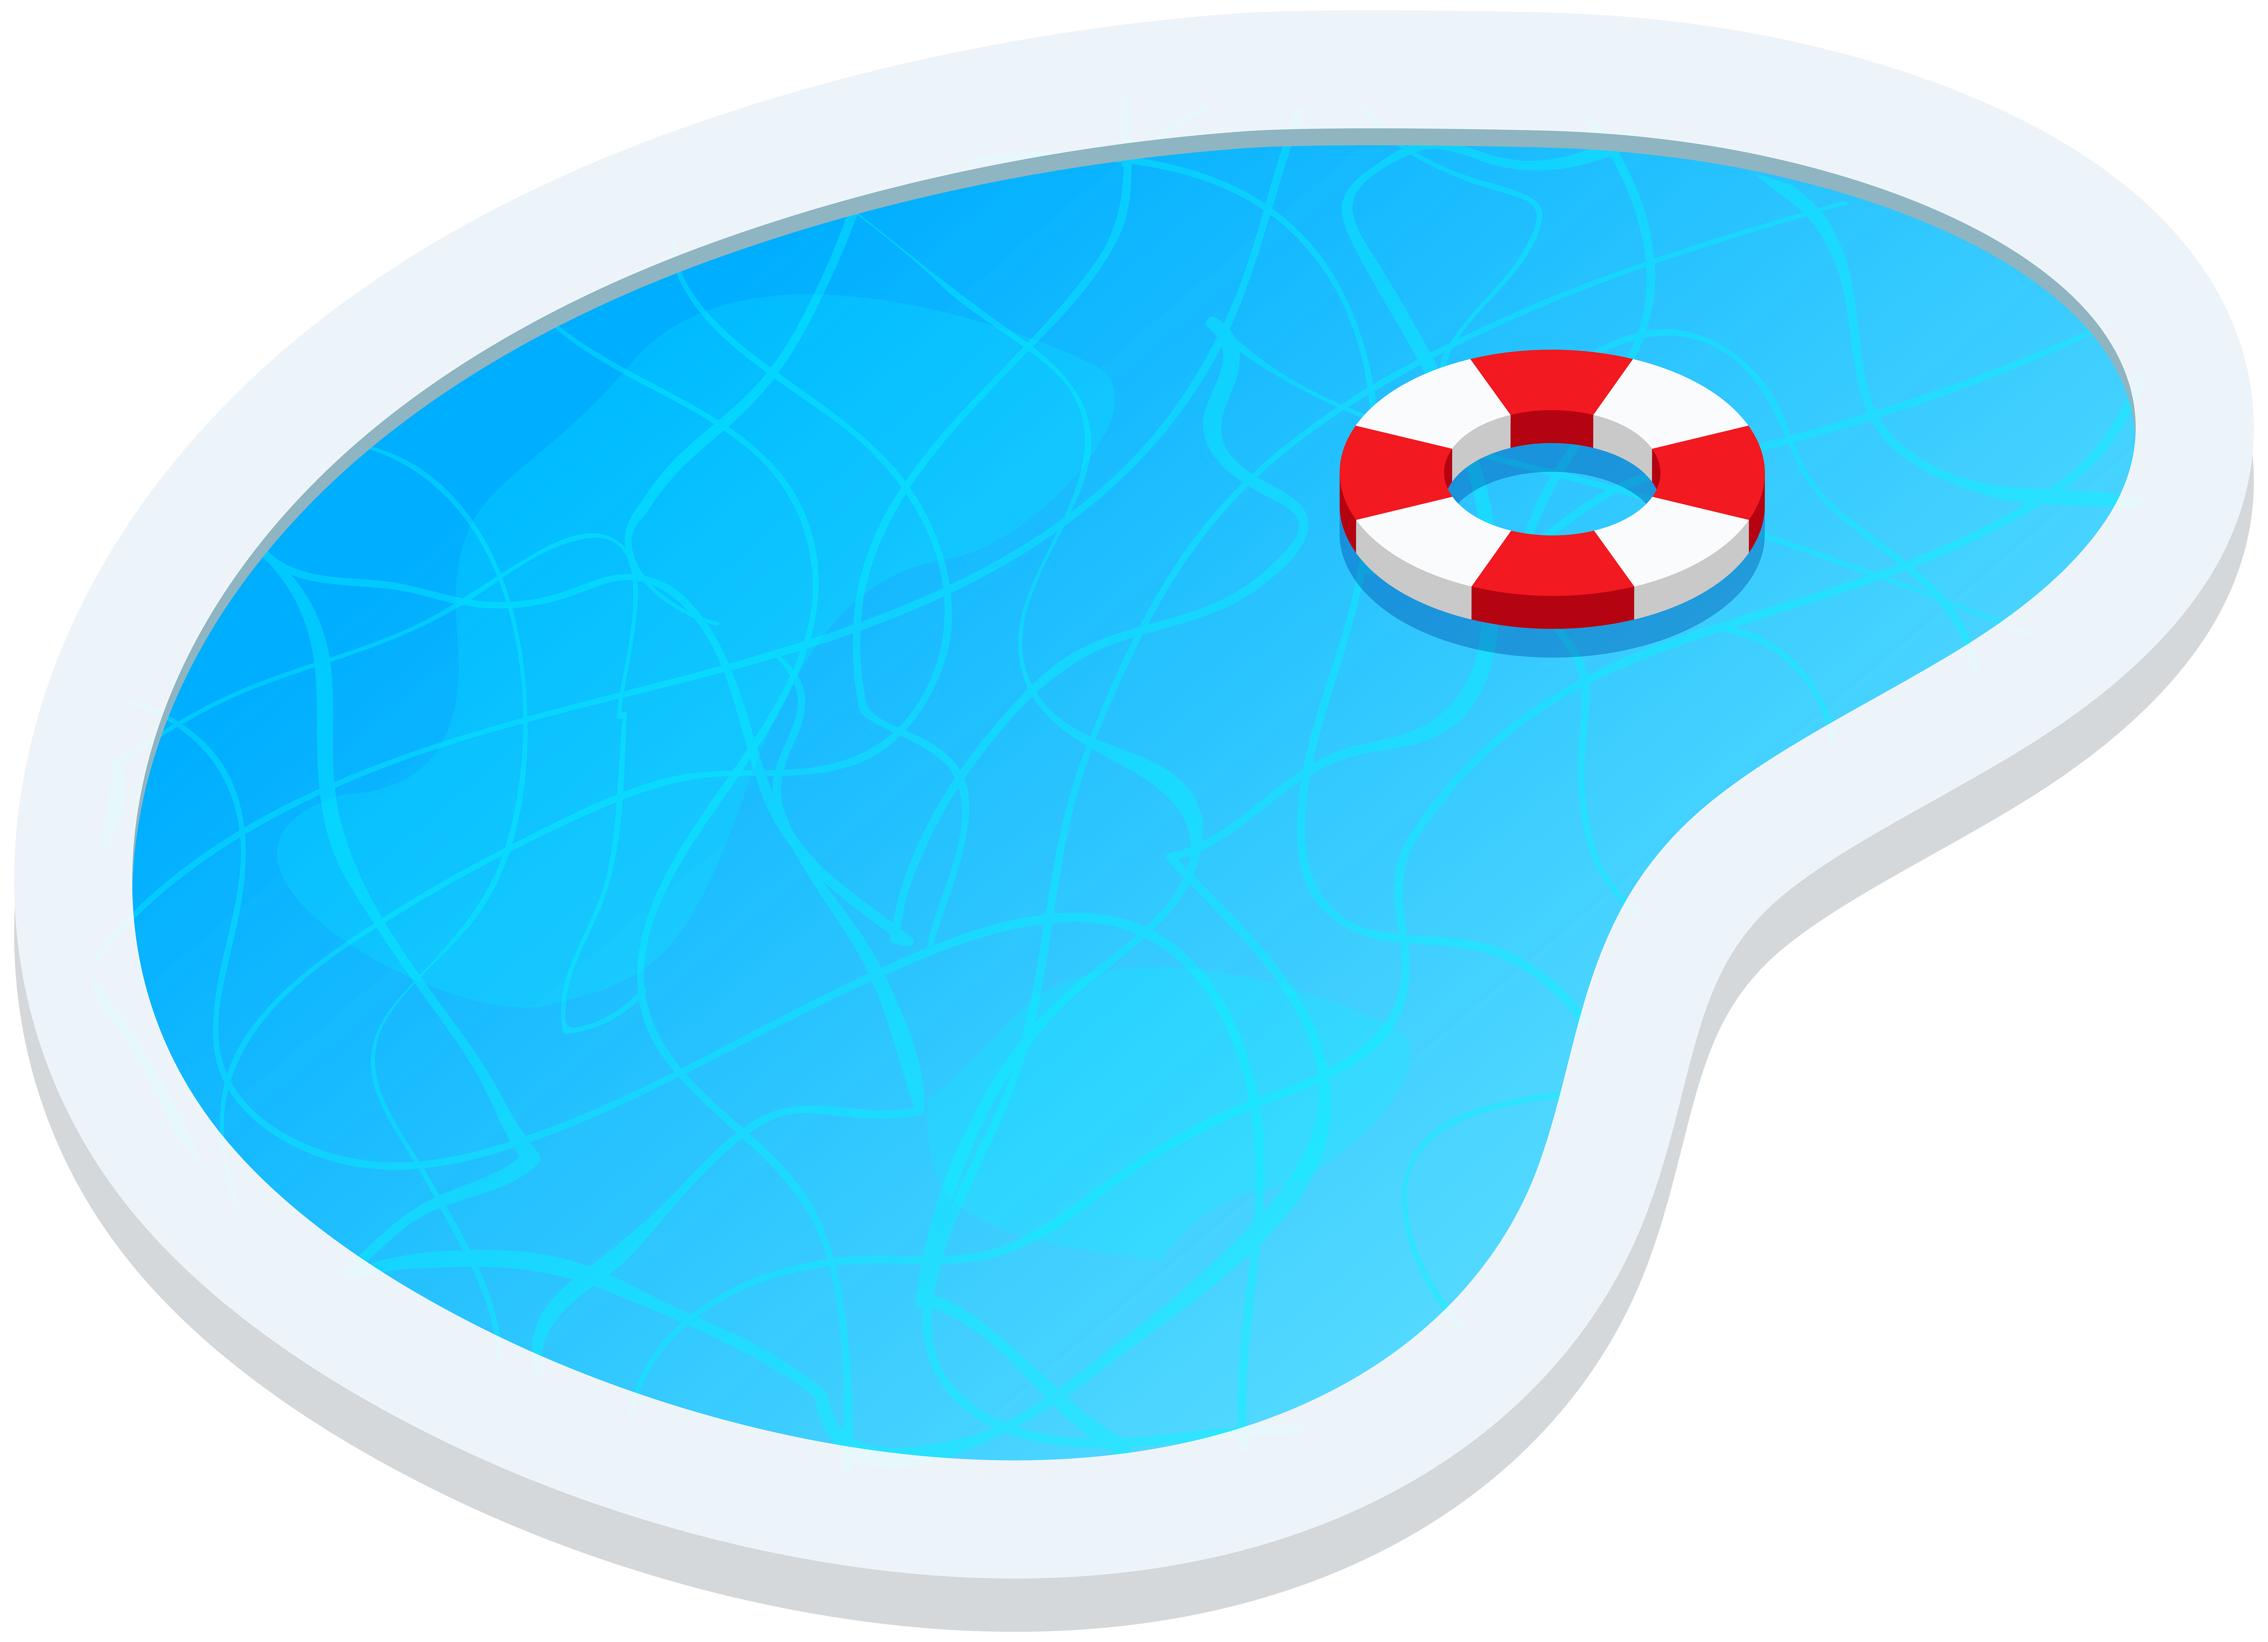 Swimming pool oval.